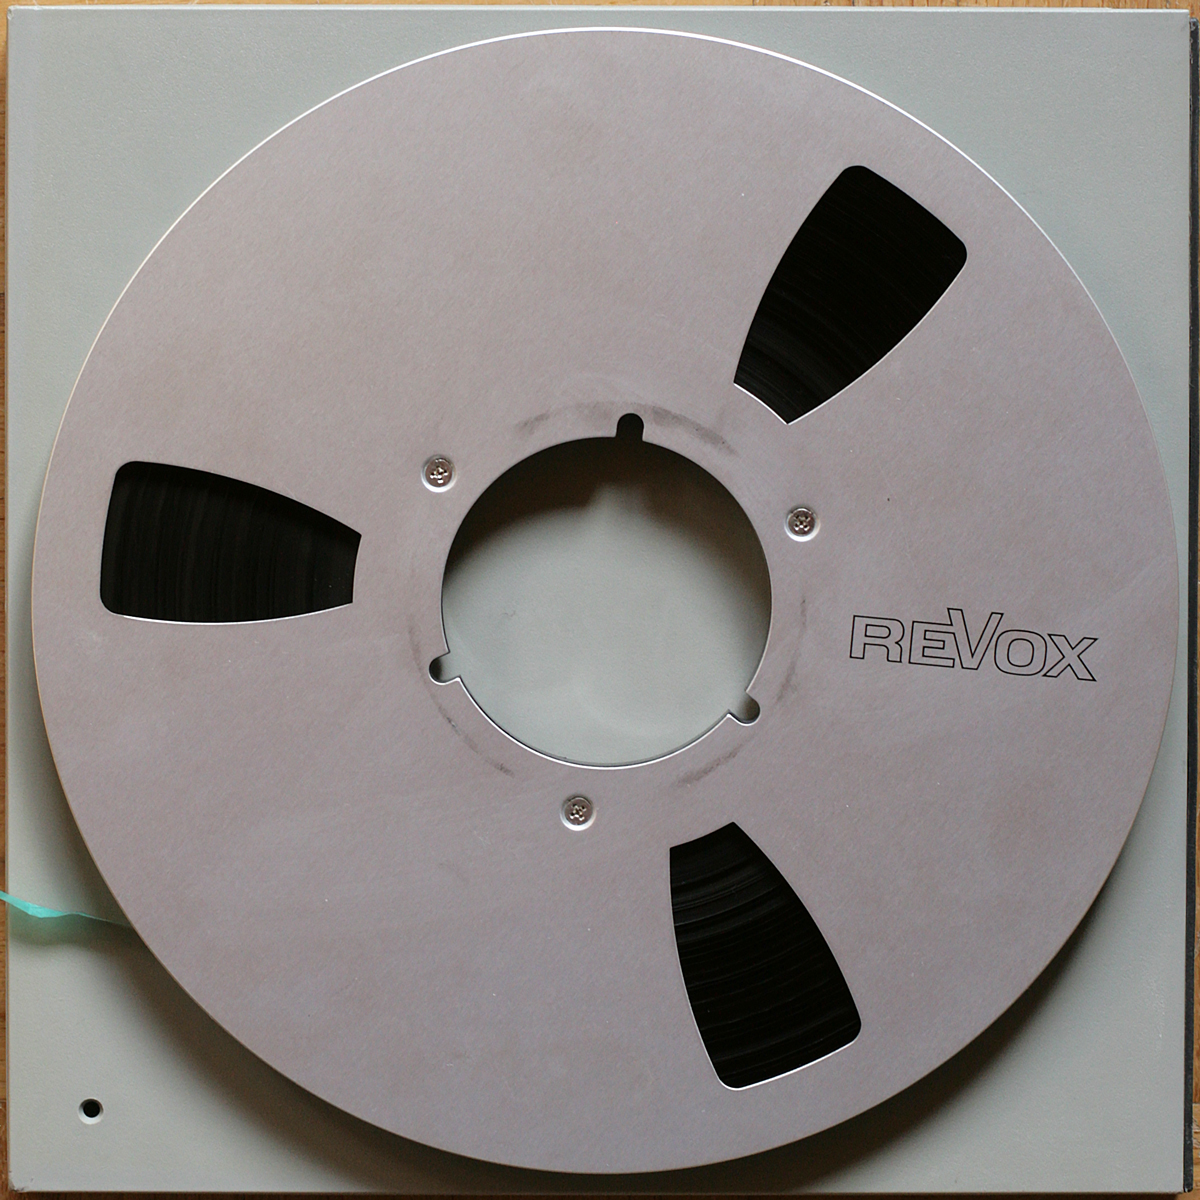 Revox Mastering Tape 631 • Bande magnétique avec bobine métallique alu • Sound recording tape with alu metal reel • Tonband mit Alu-Metallspule • Ø 26.5 cm • NAB • Occasion • Used